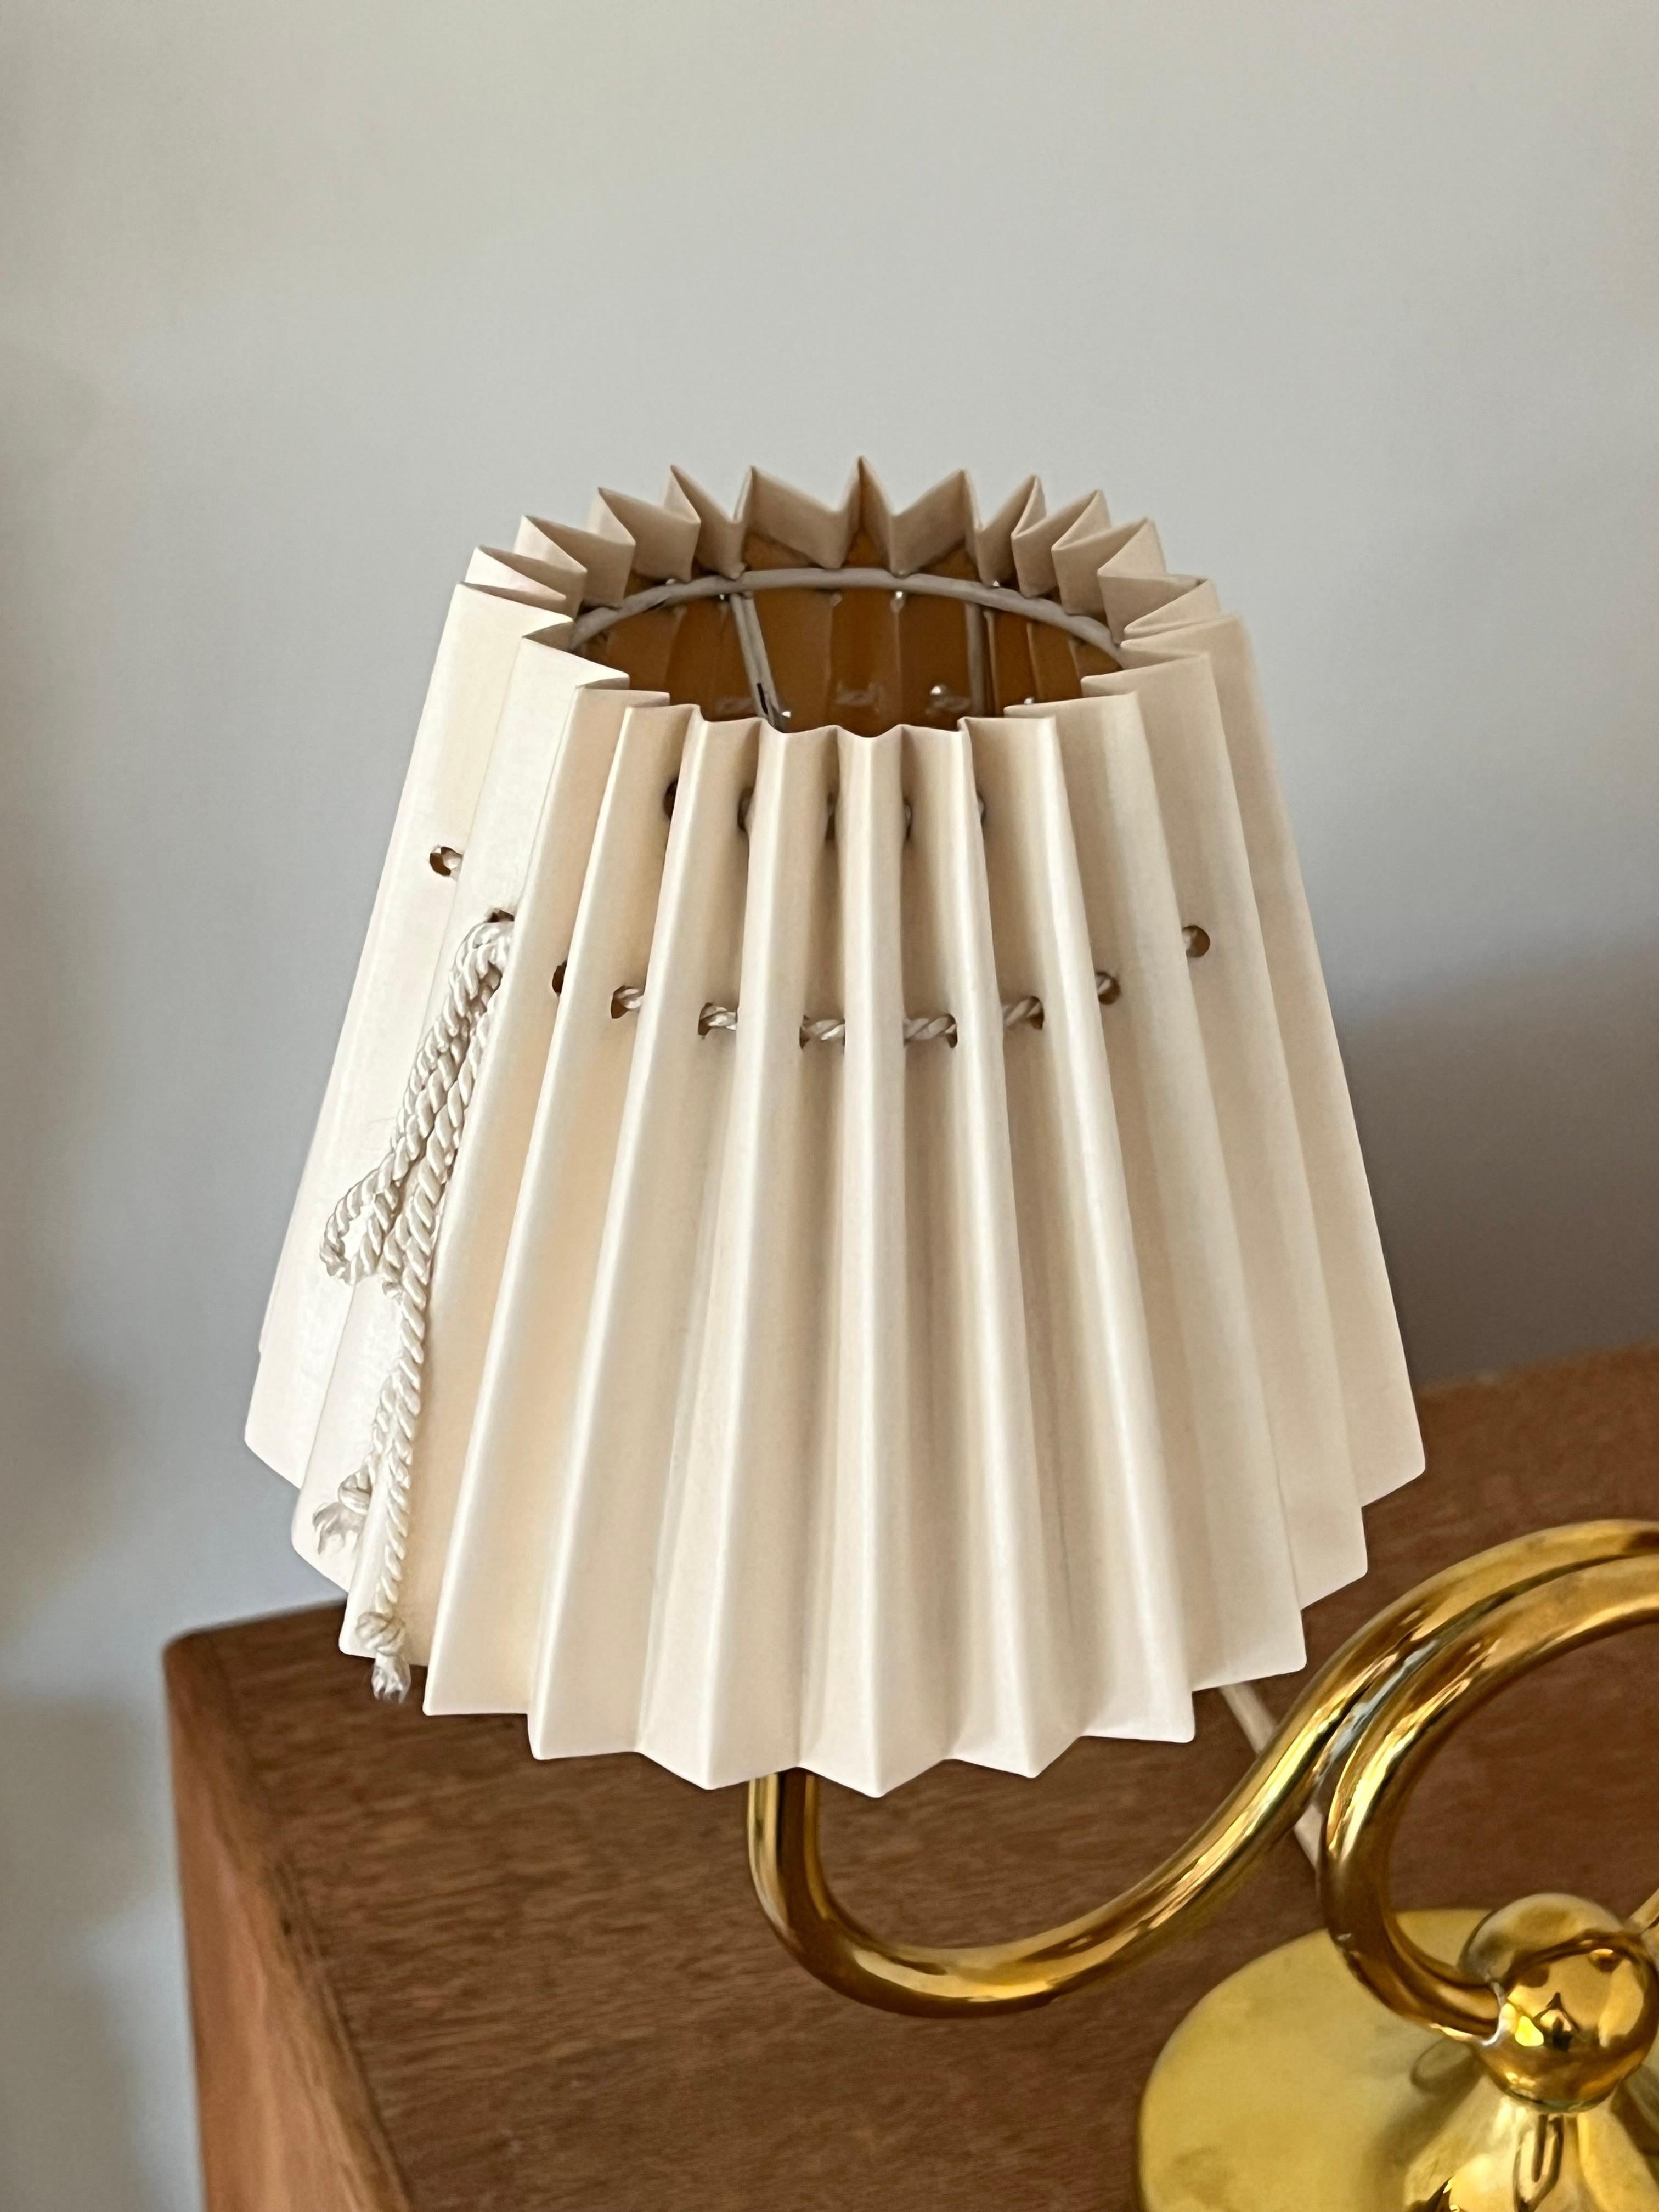 Swedish Josef Frank Brass & Pleated Shades Table Lamp - 1960s Svenskt Tenn, Sweden For Sale